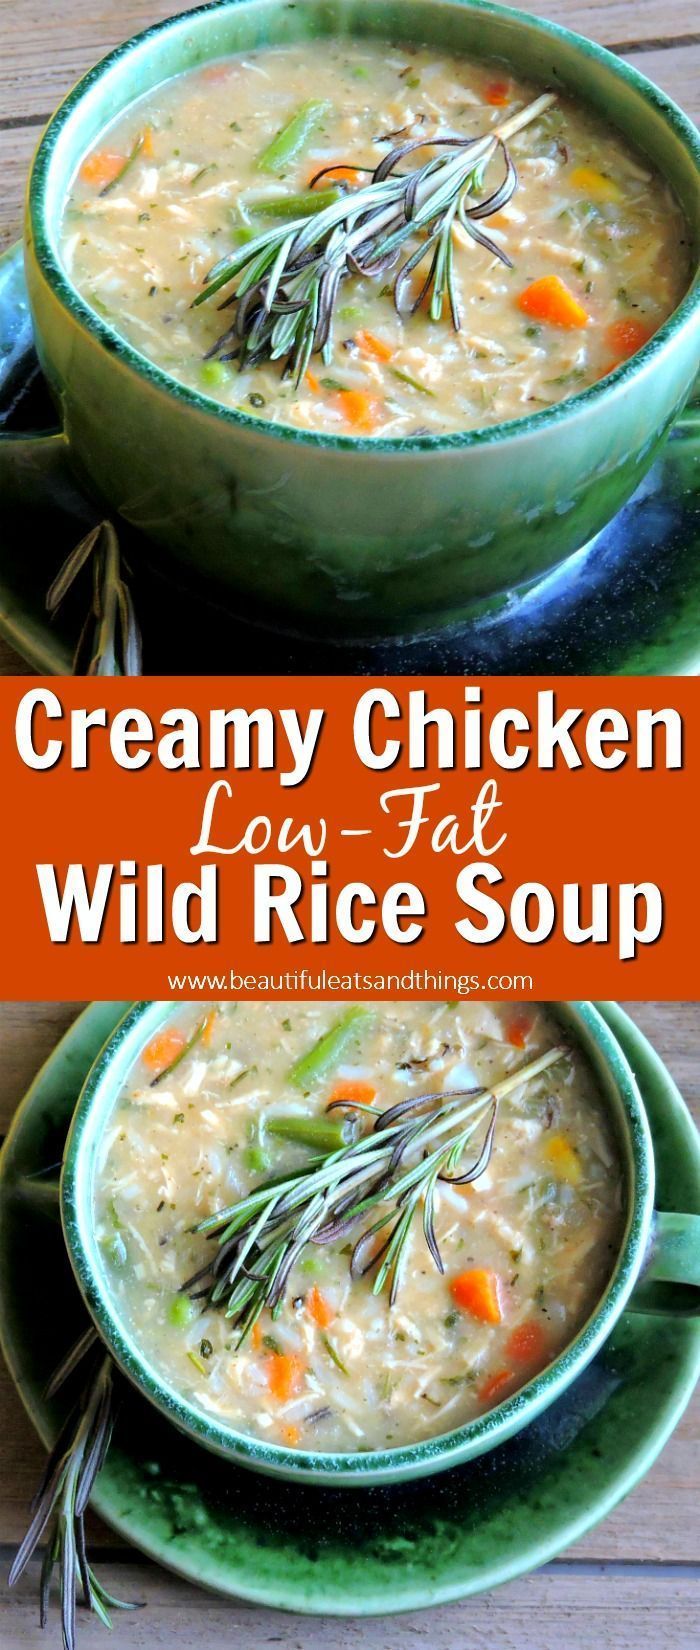 Asian low fat soup recipes